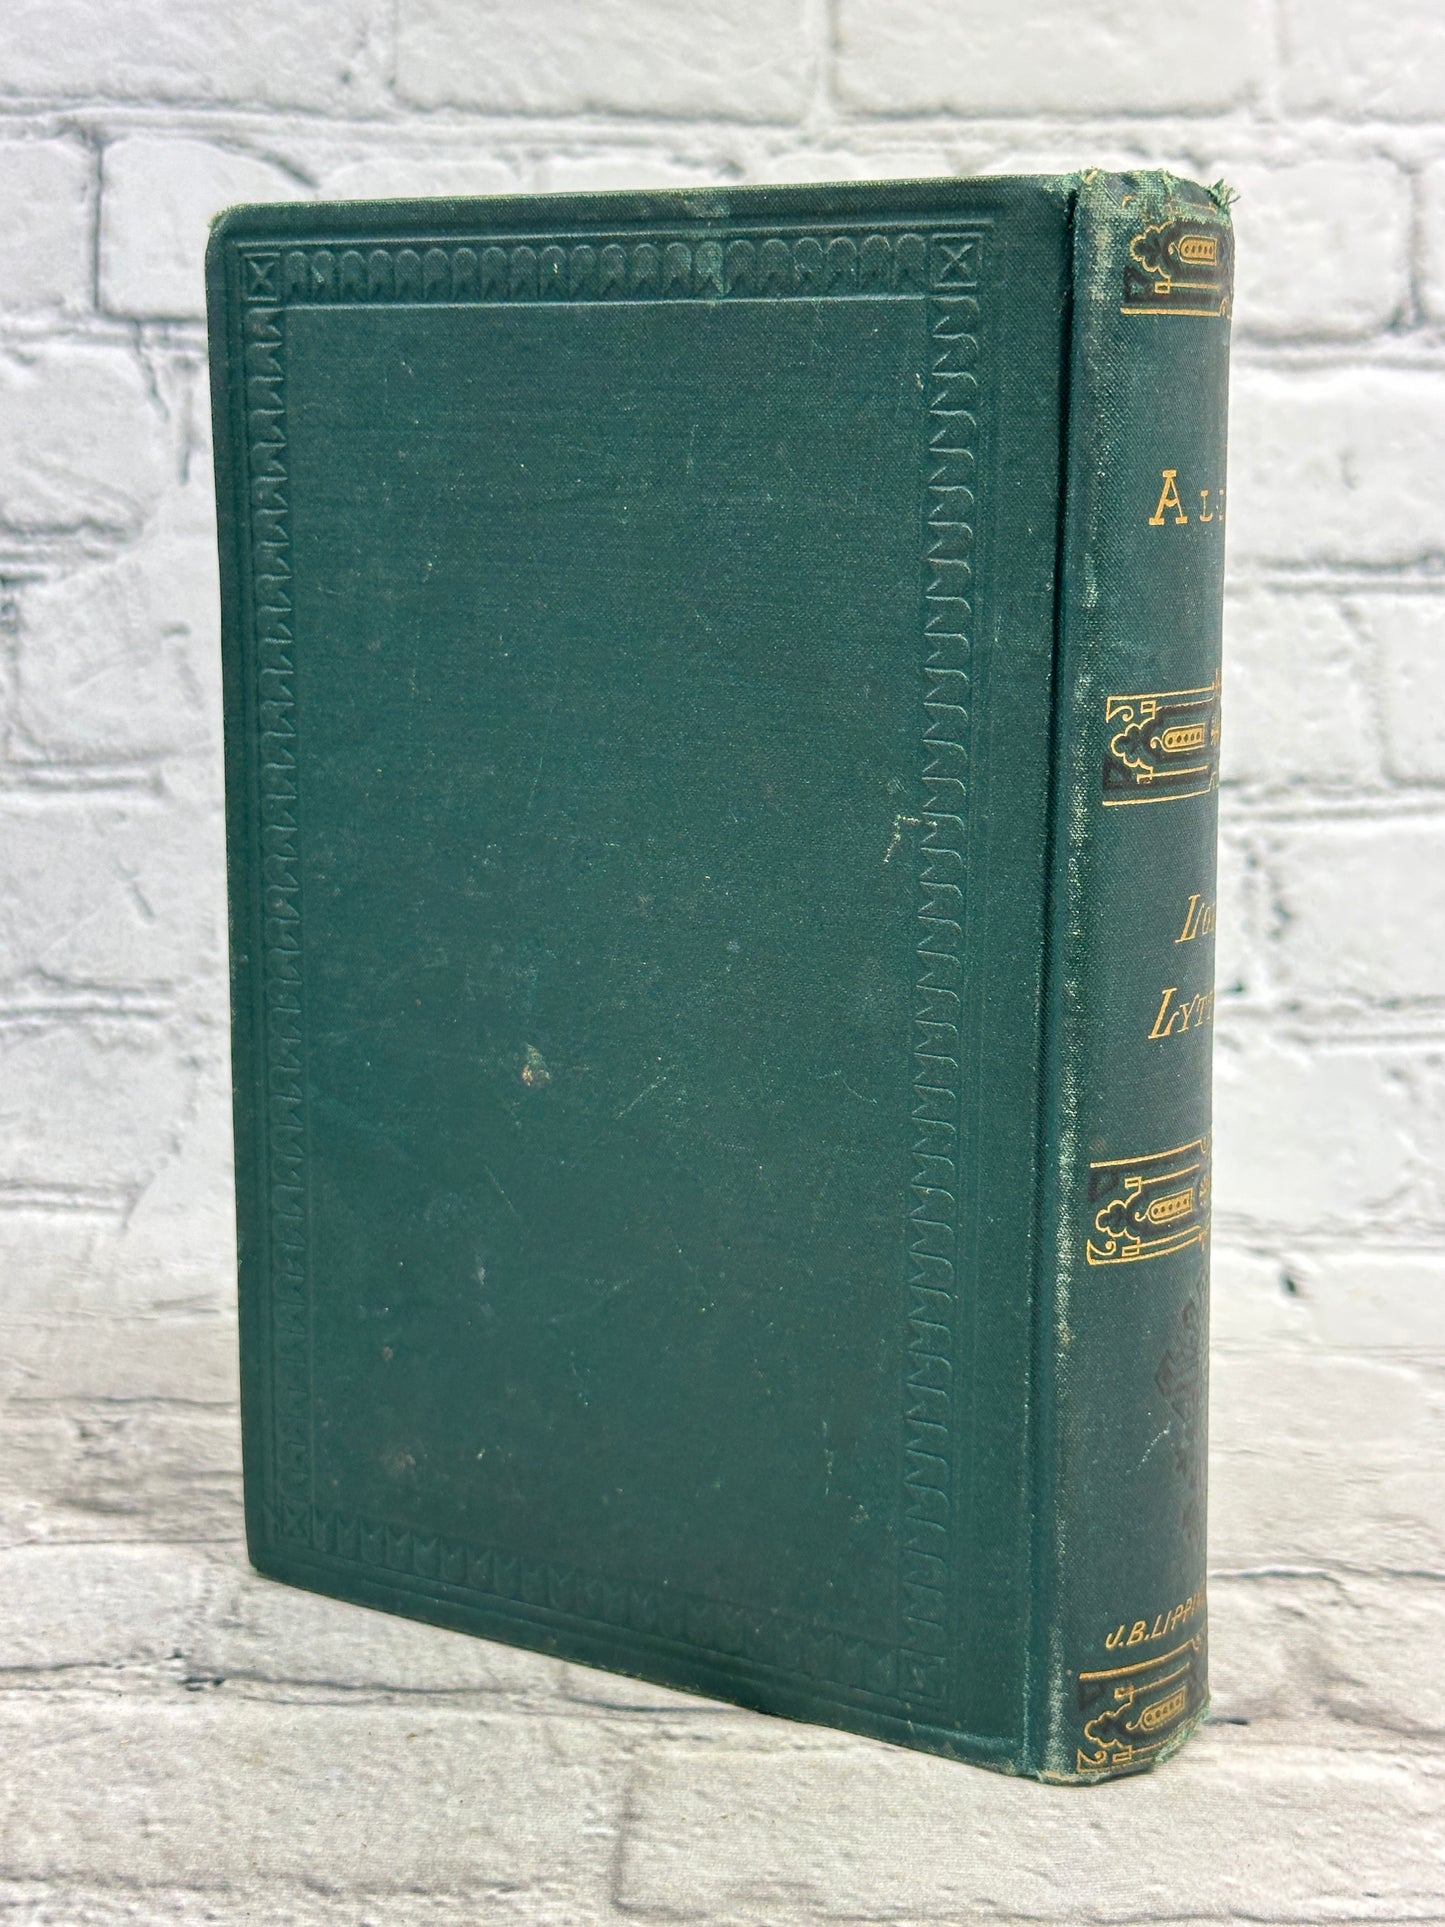 Alice or the Mysteries by Sir Edward Bulwer Lytton [1879]